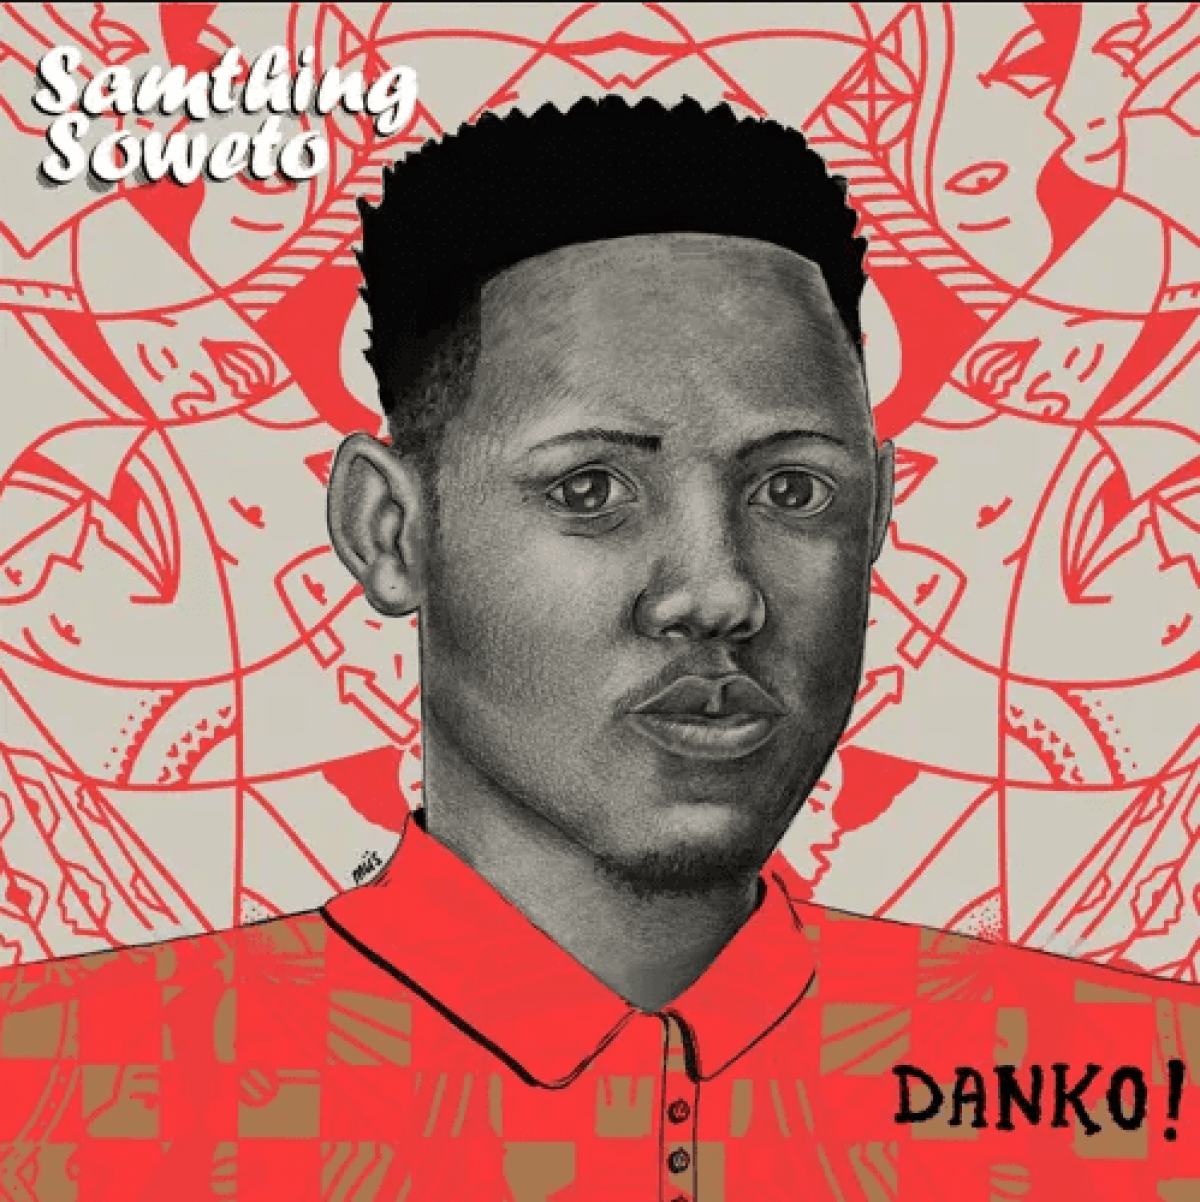 The Danko! Medley